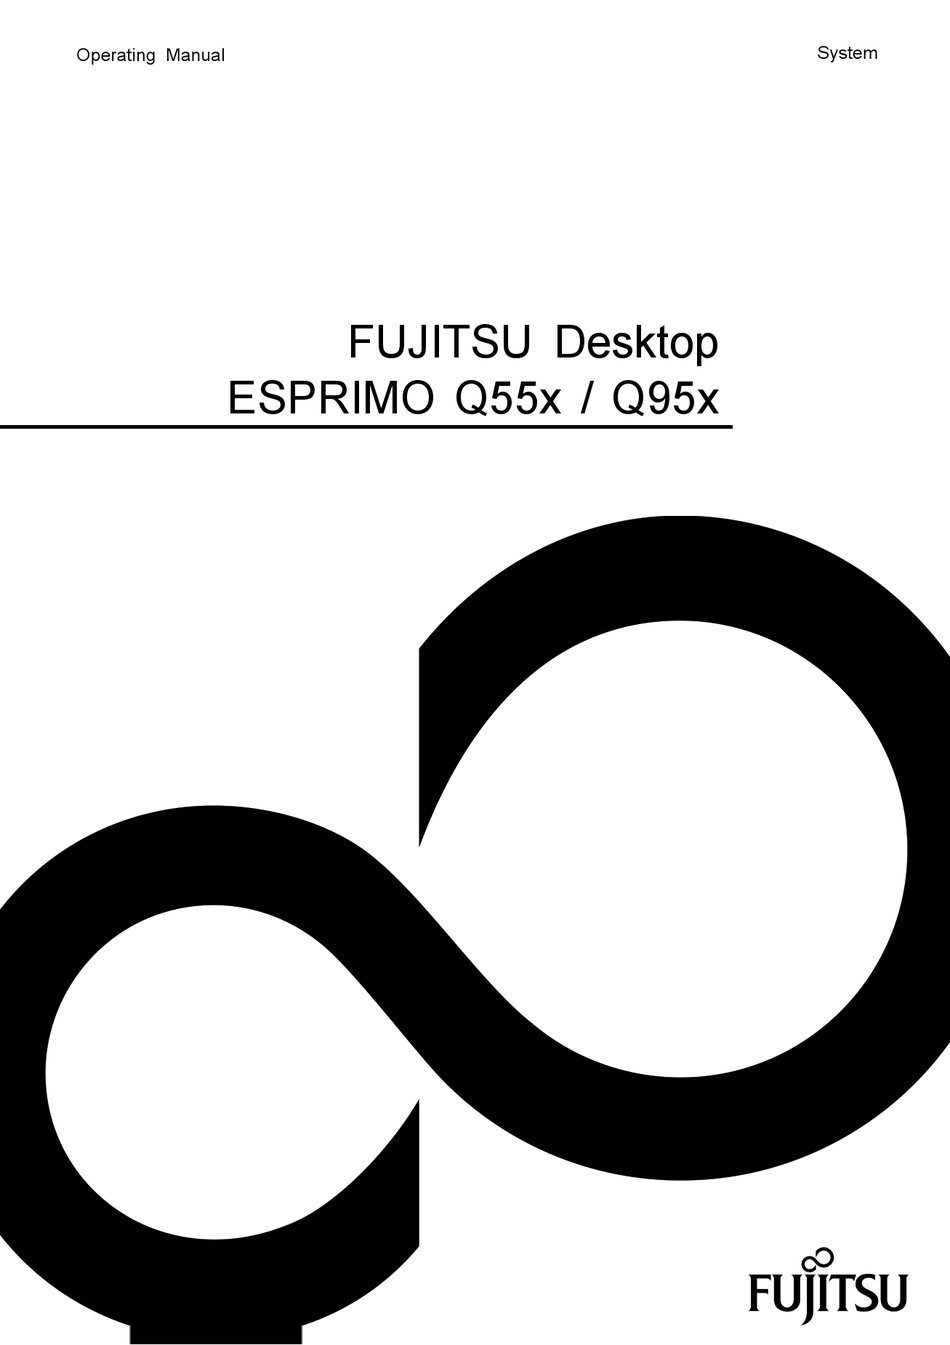 FUJITSU ESPRIMO Q55X OPERATING MANUAL Pdf Download - ManualsLib